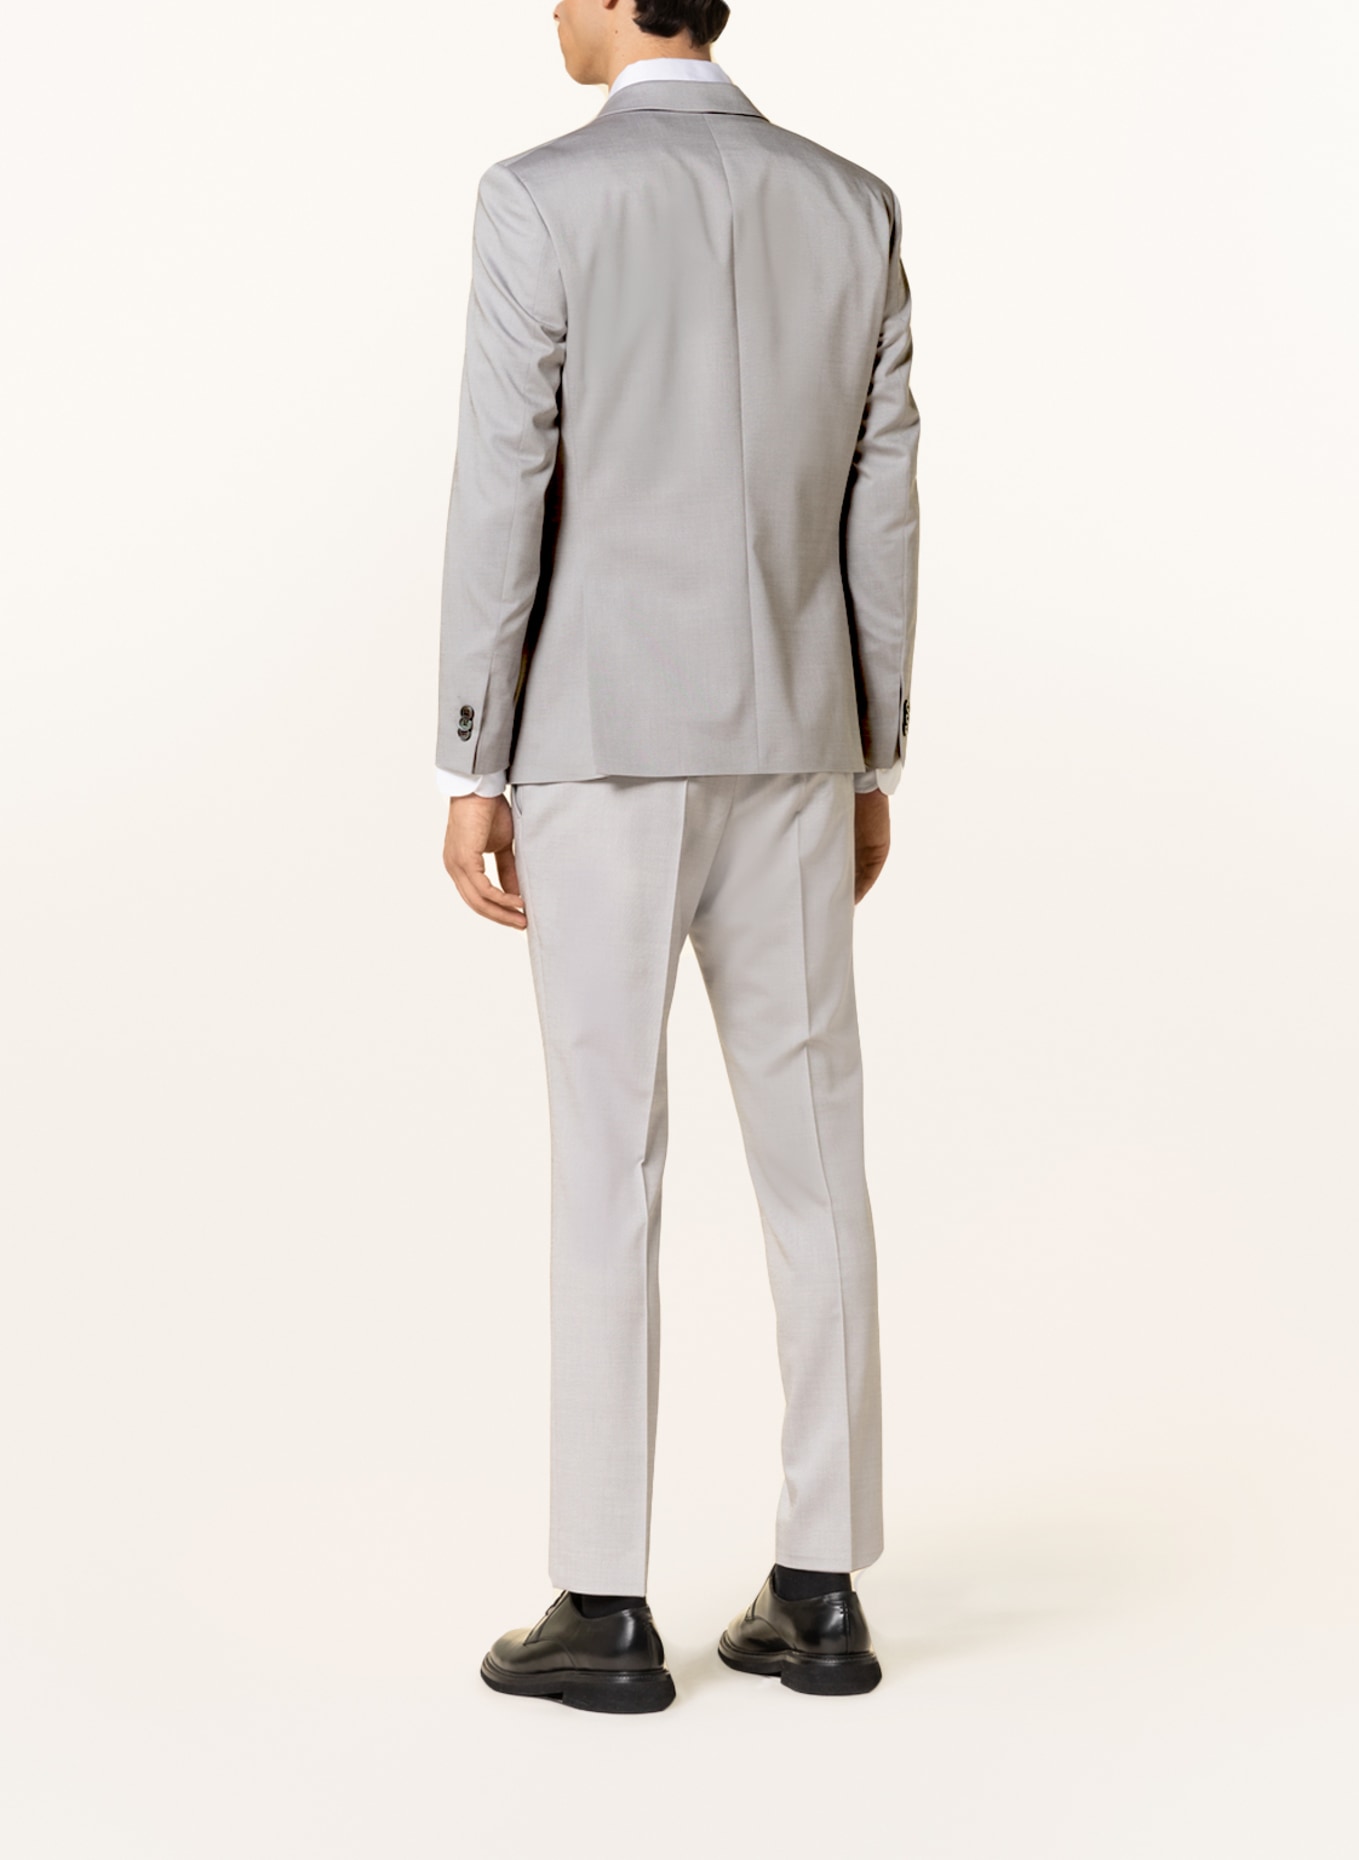 JOOP! Suit jacket WEDDING DAMON extra slim fit, Color: 060 Open Grey                  060 (Image 4)